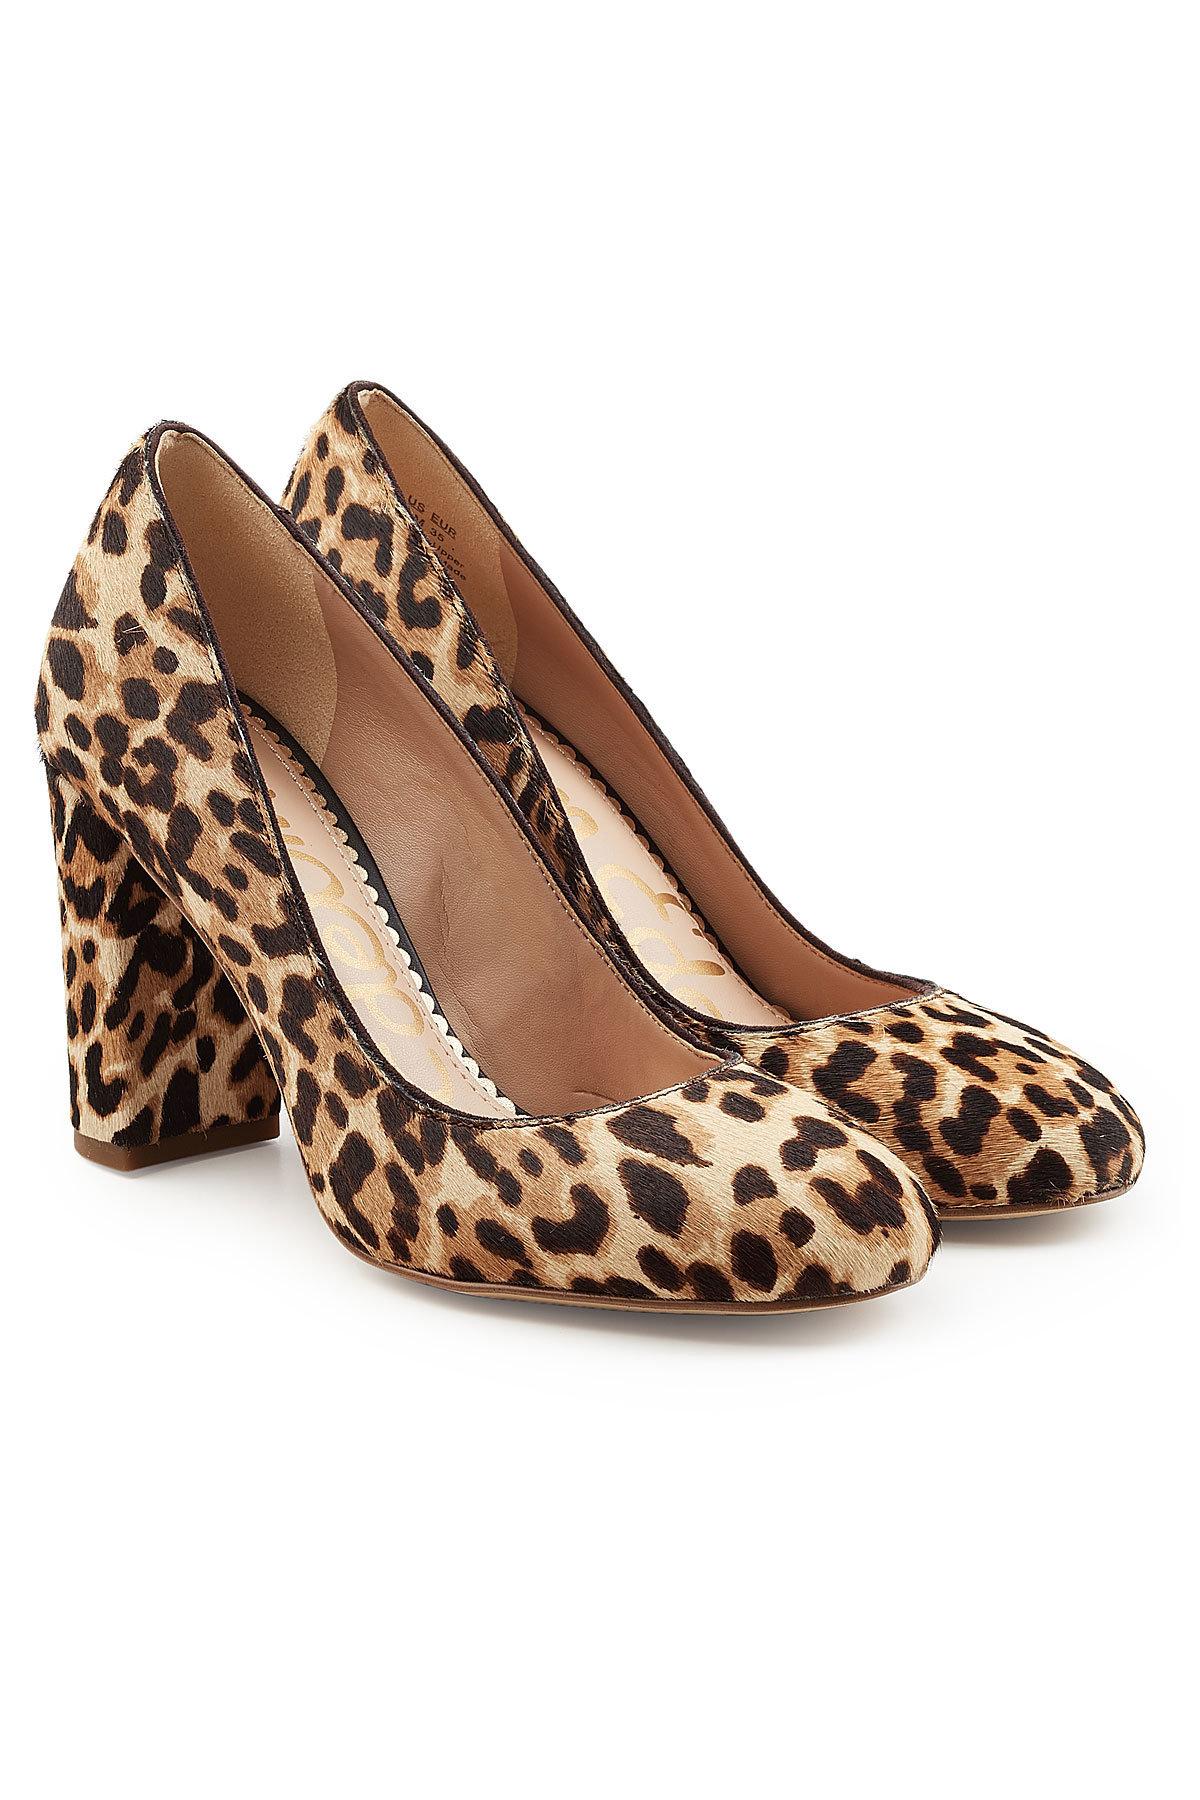 sam edelman leopard print heels